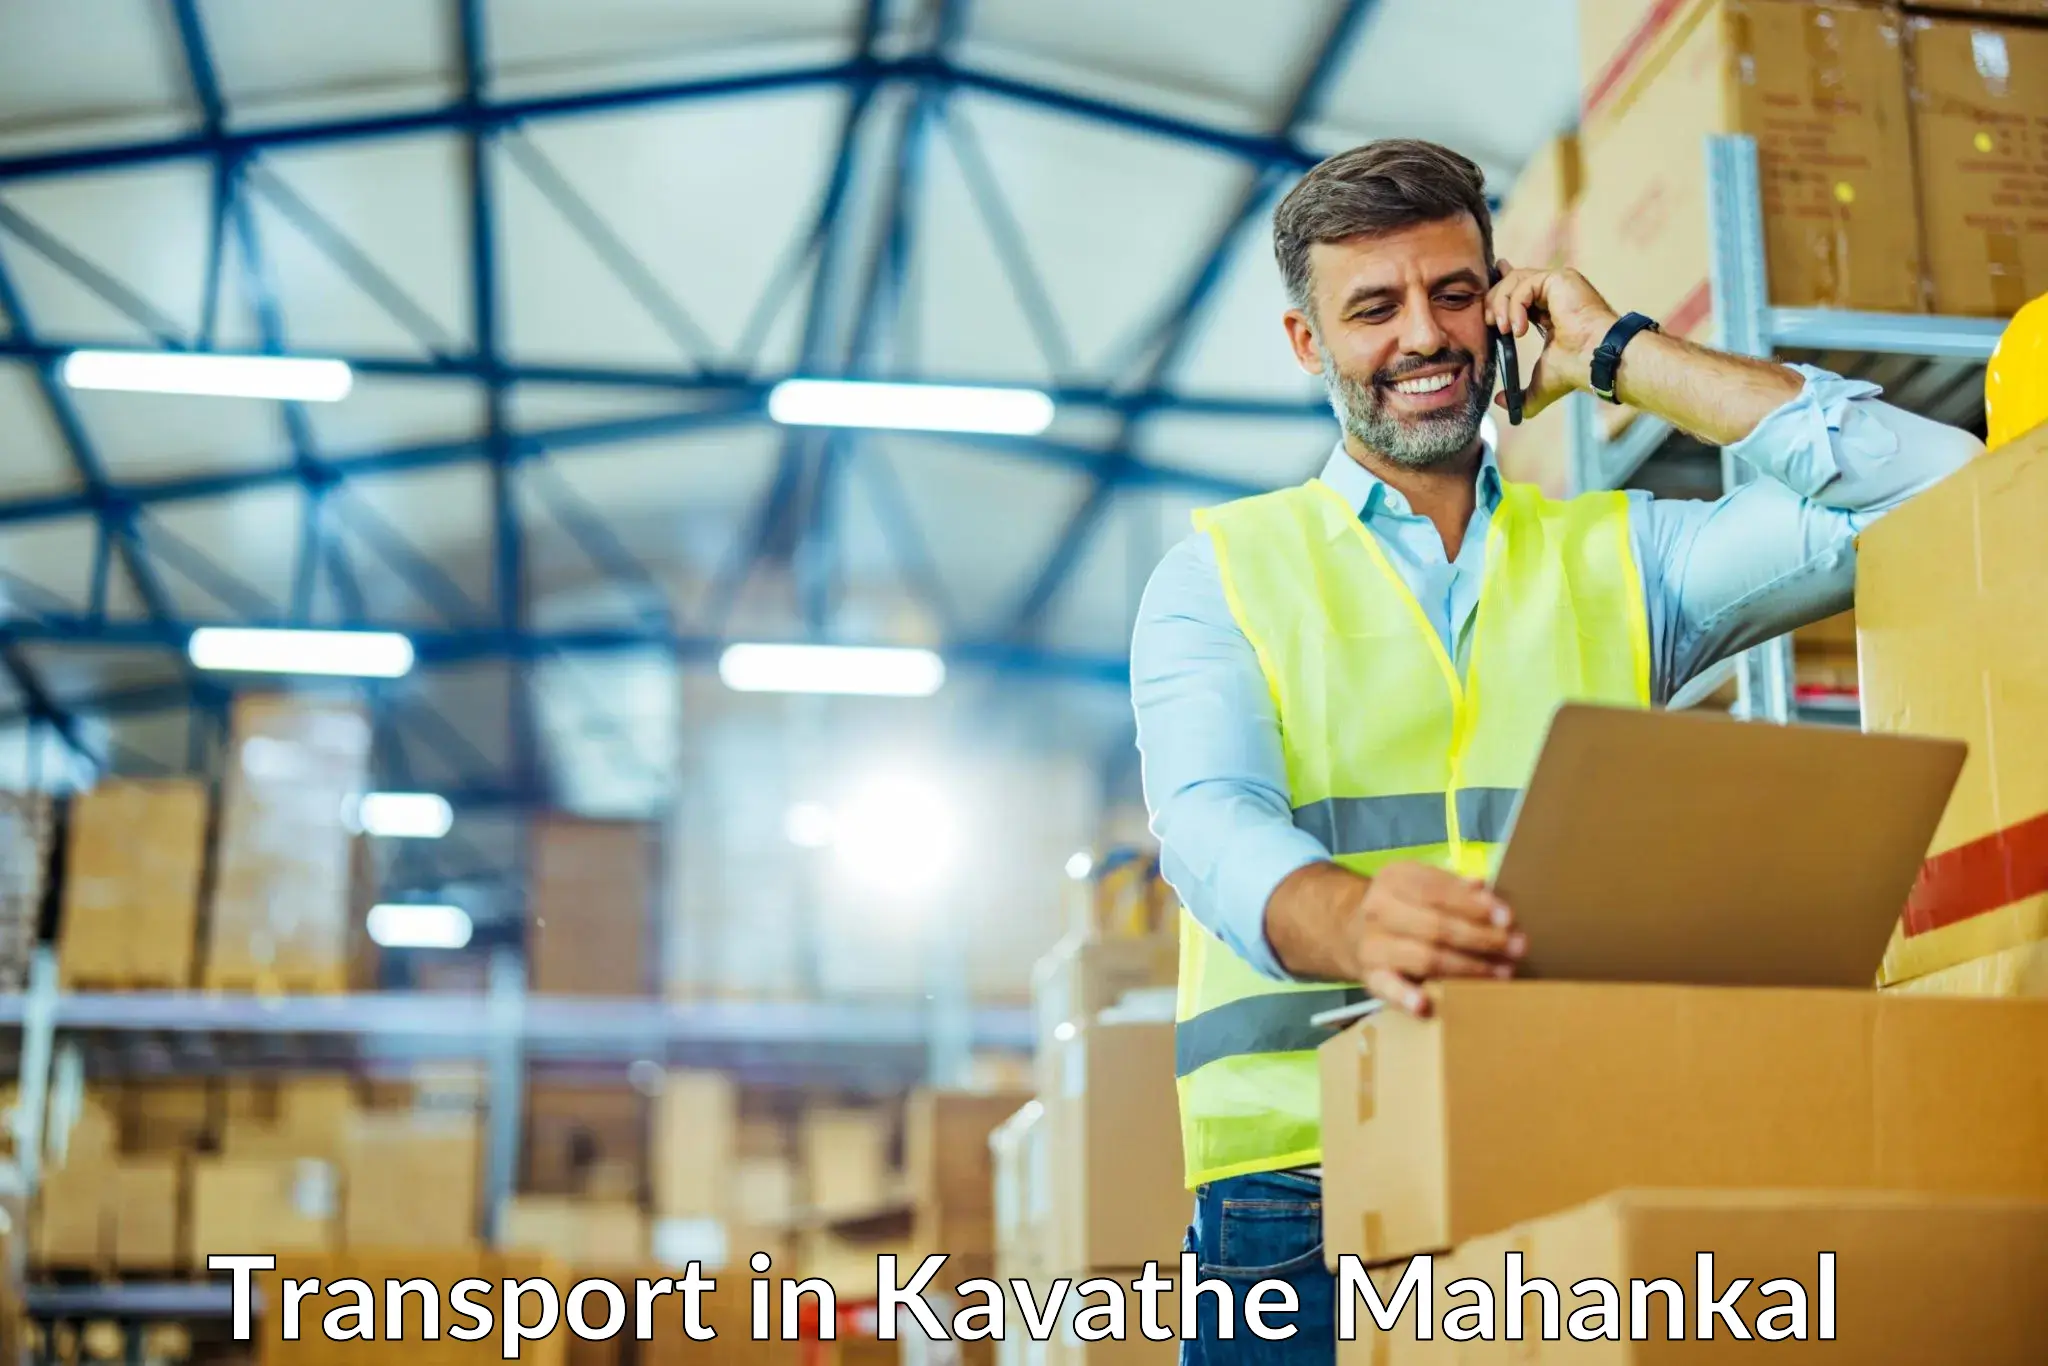 Domestic goods transportation services in Kavathe Mahankal